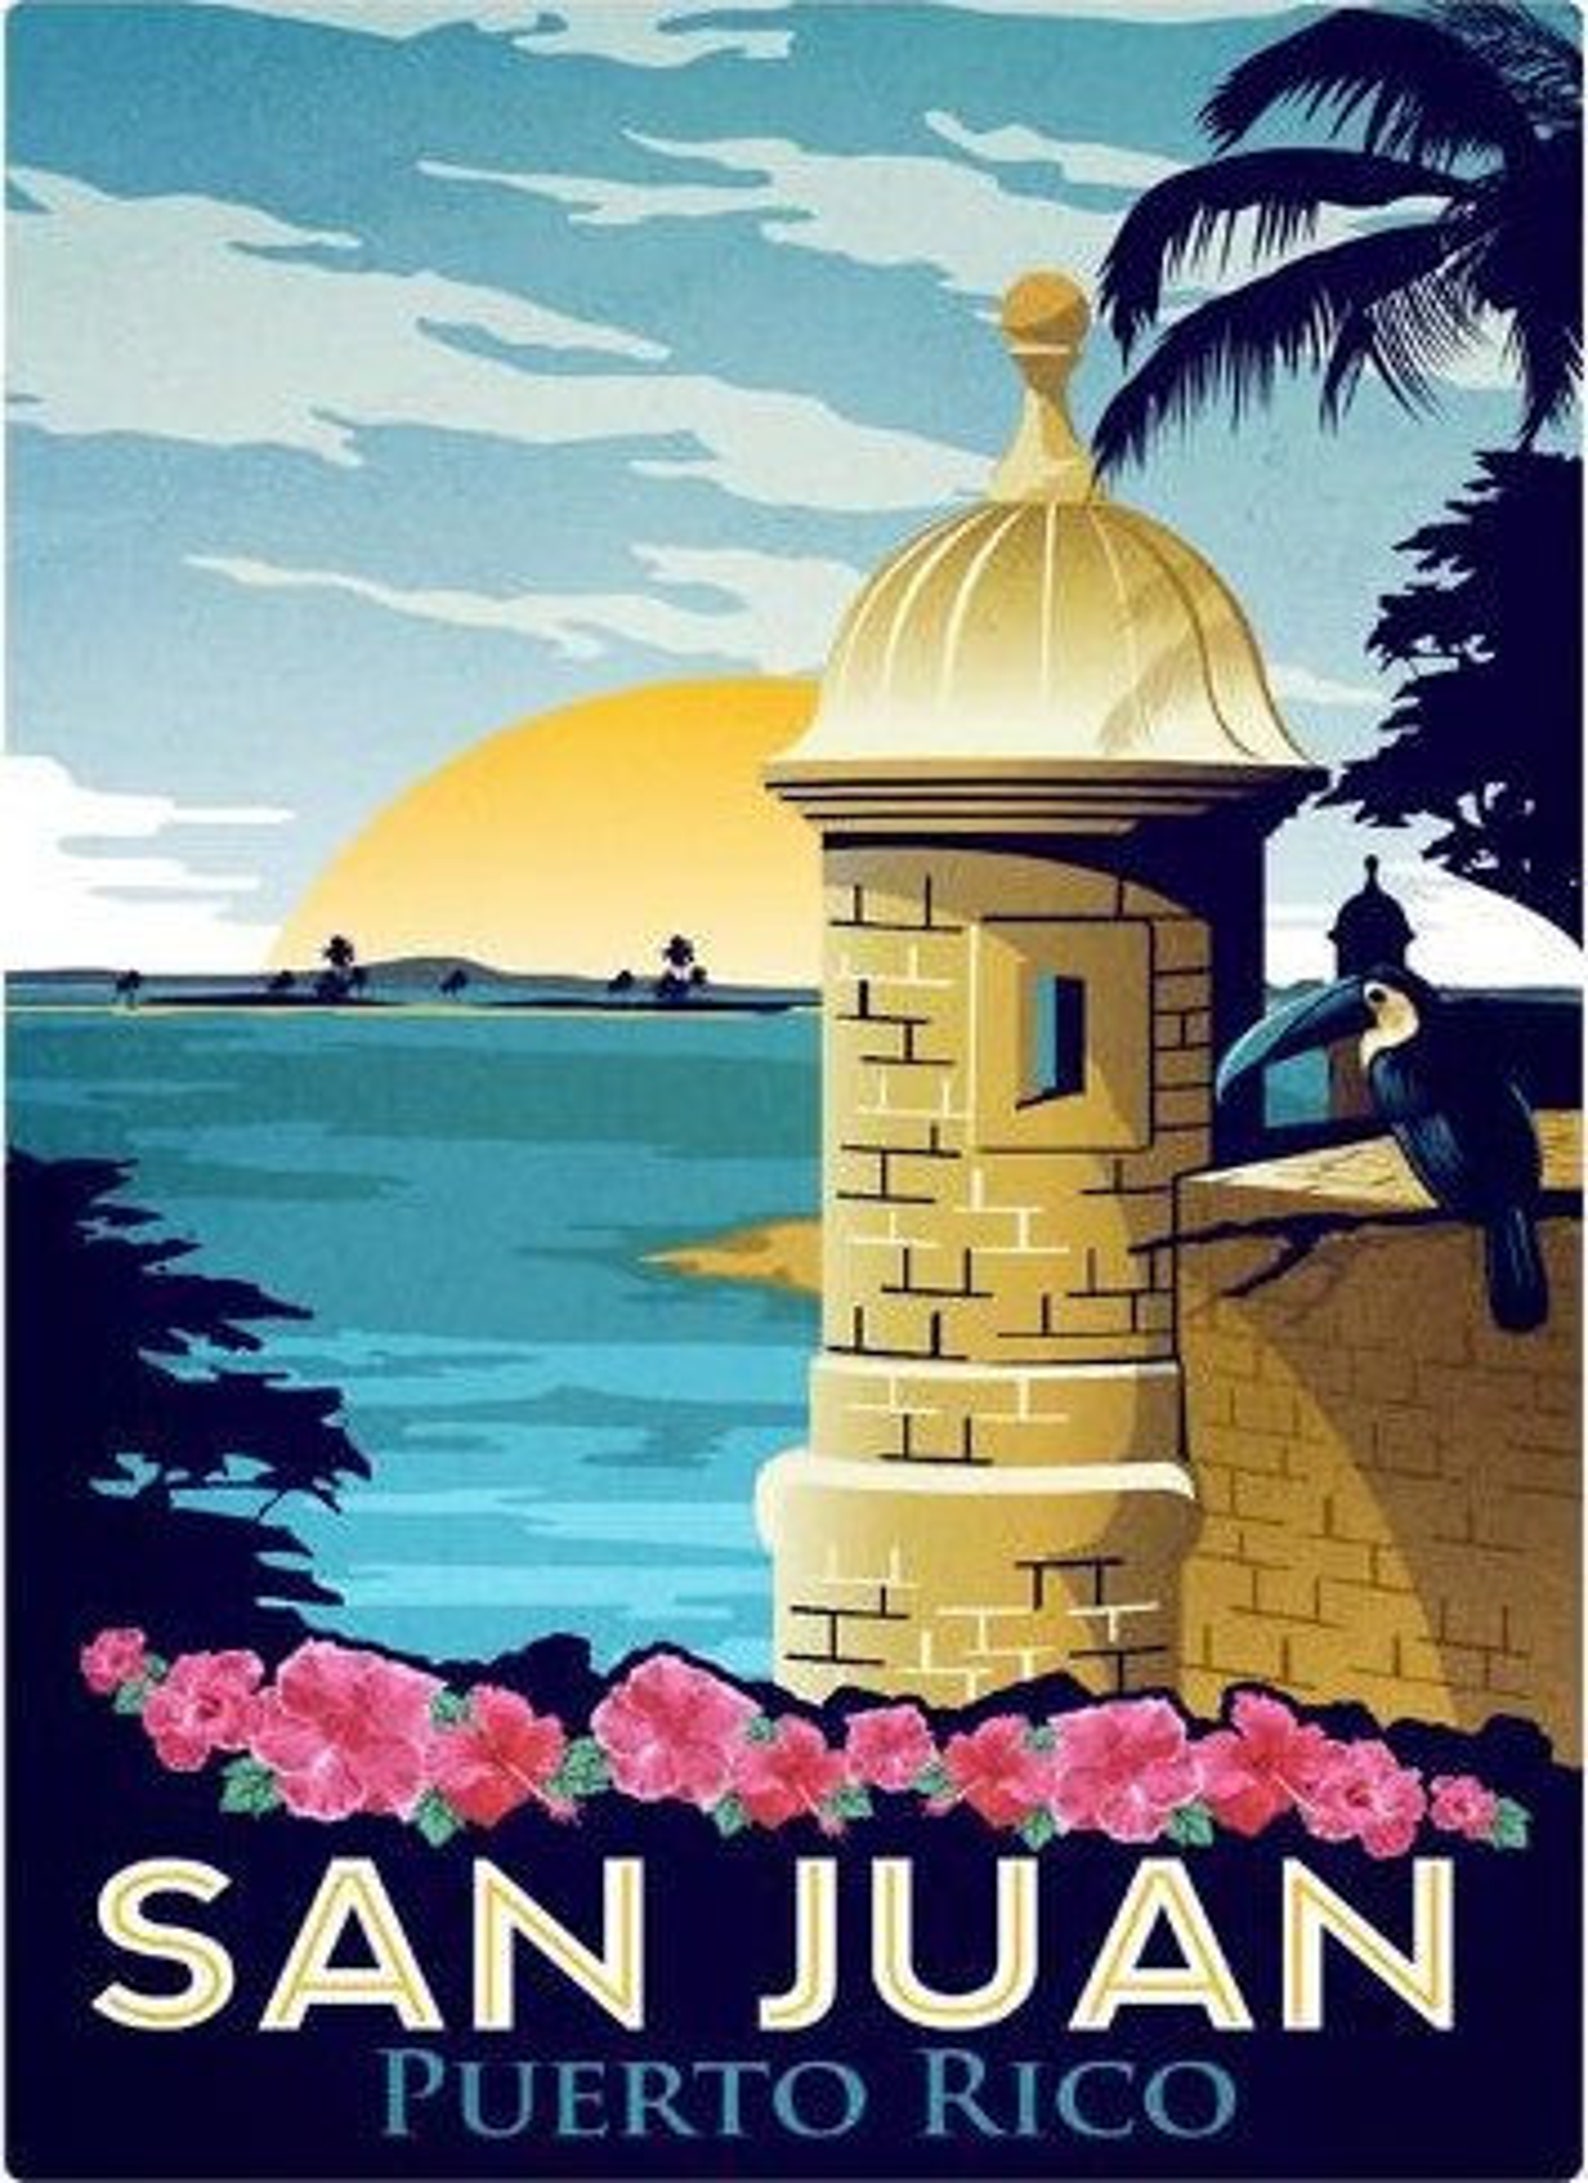 San Juan Puerto Rico Vintage Travel Poster Etsy